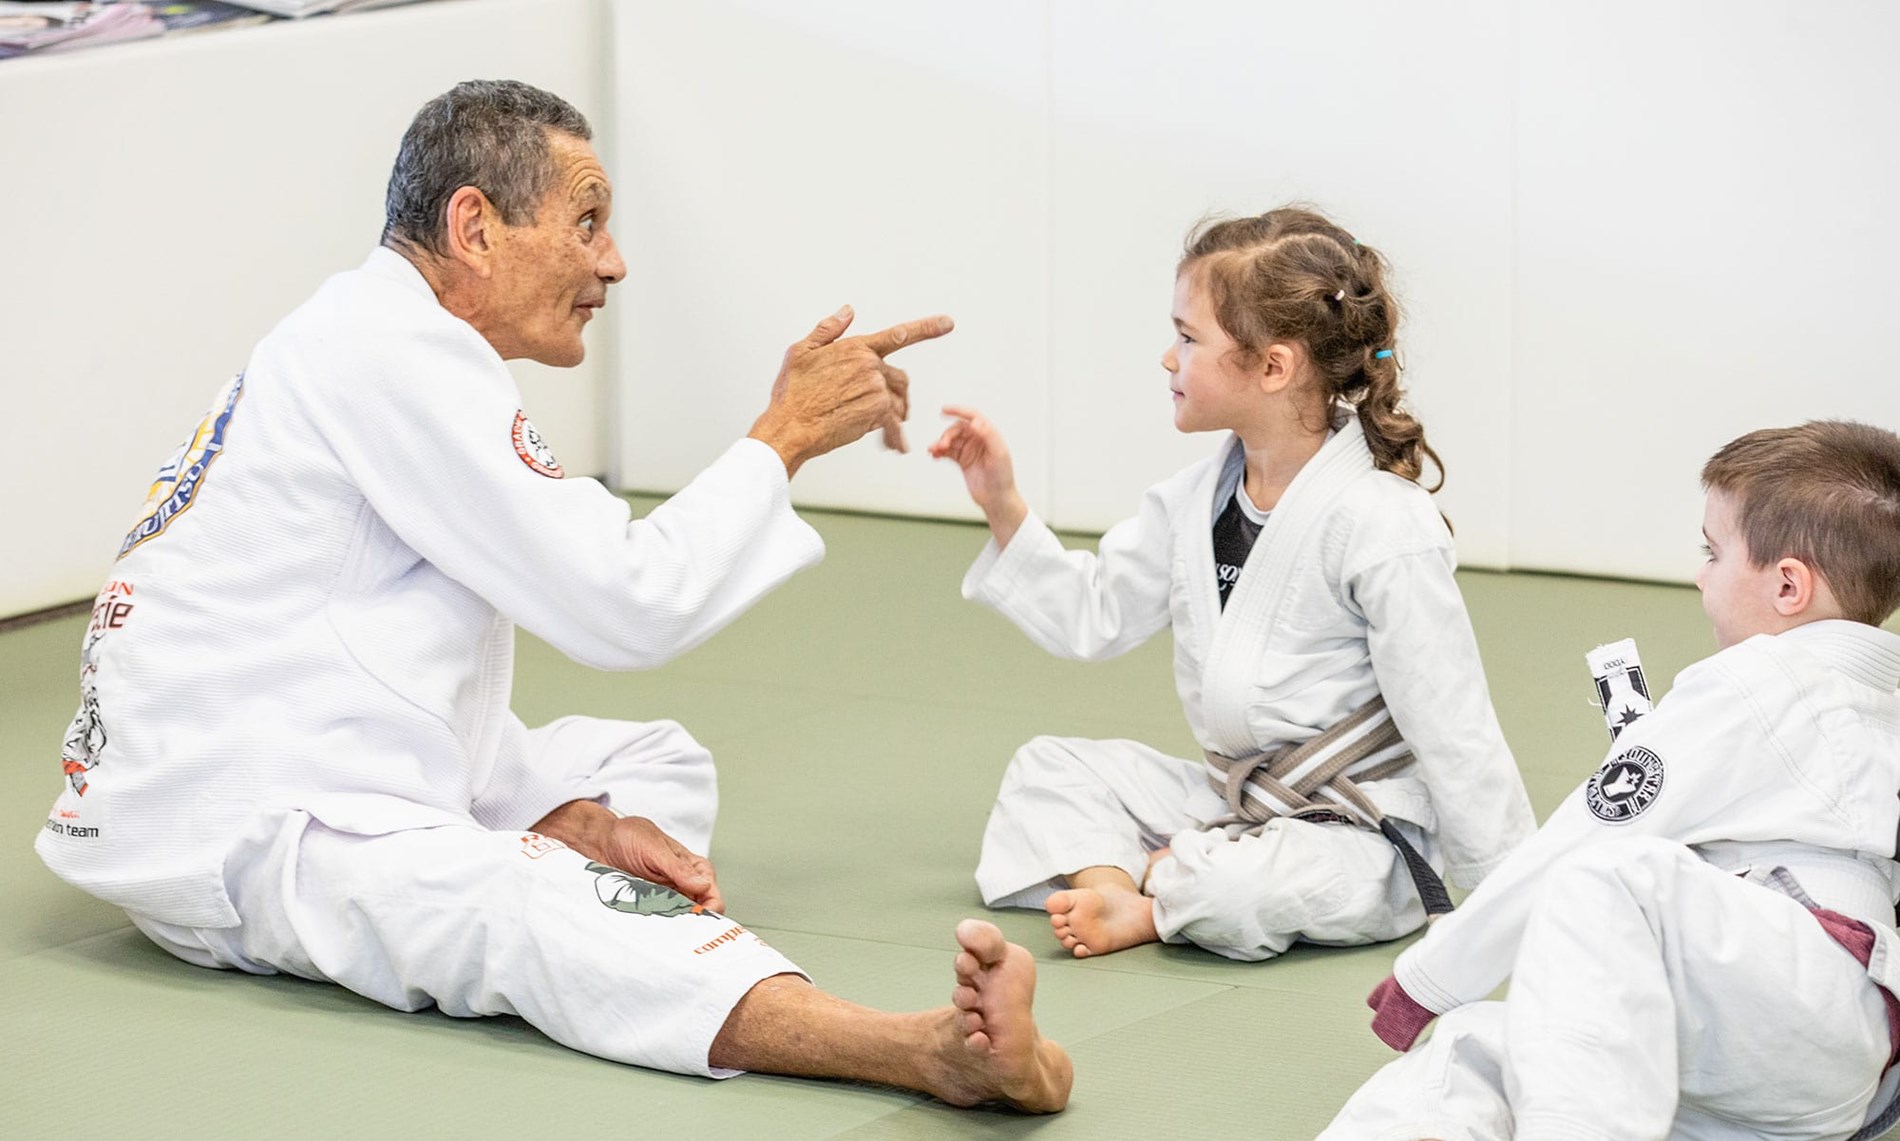 Jiu-Jitsu Classes for Kids